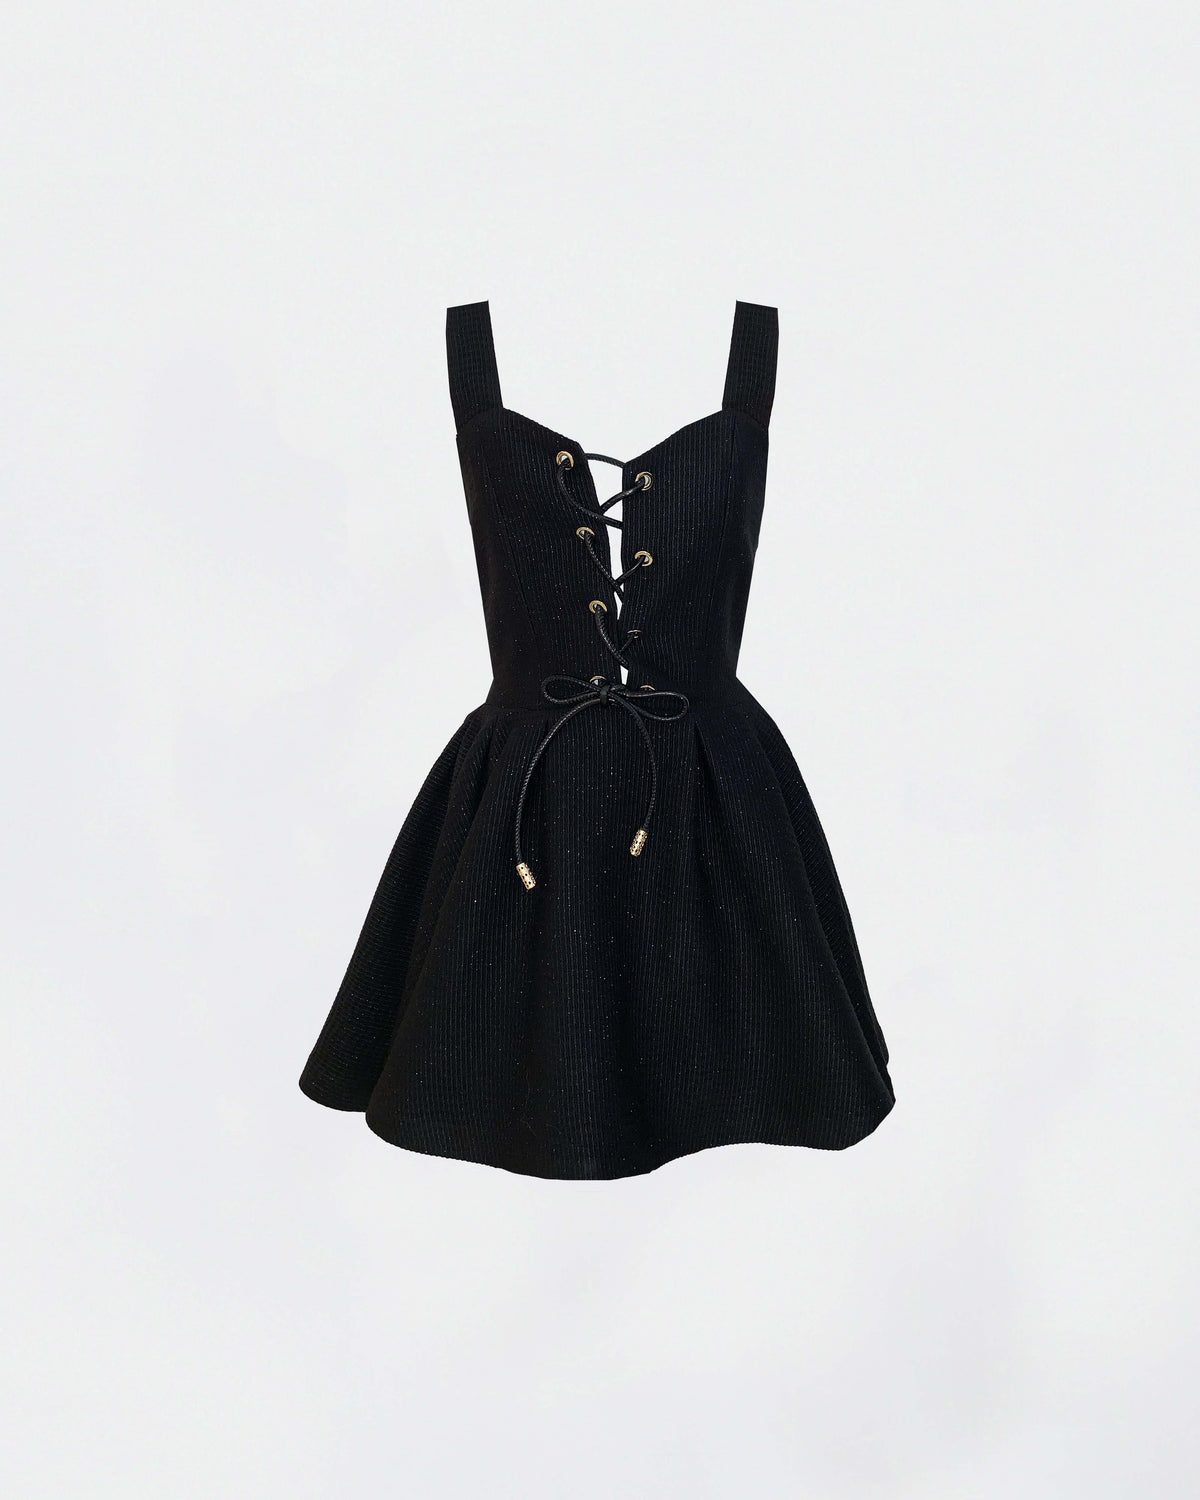 Ariane Dress in Black